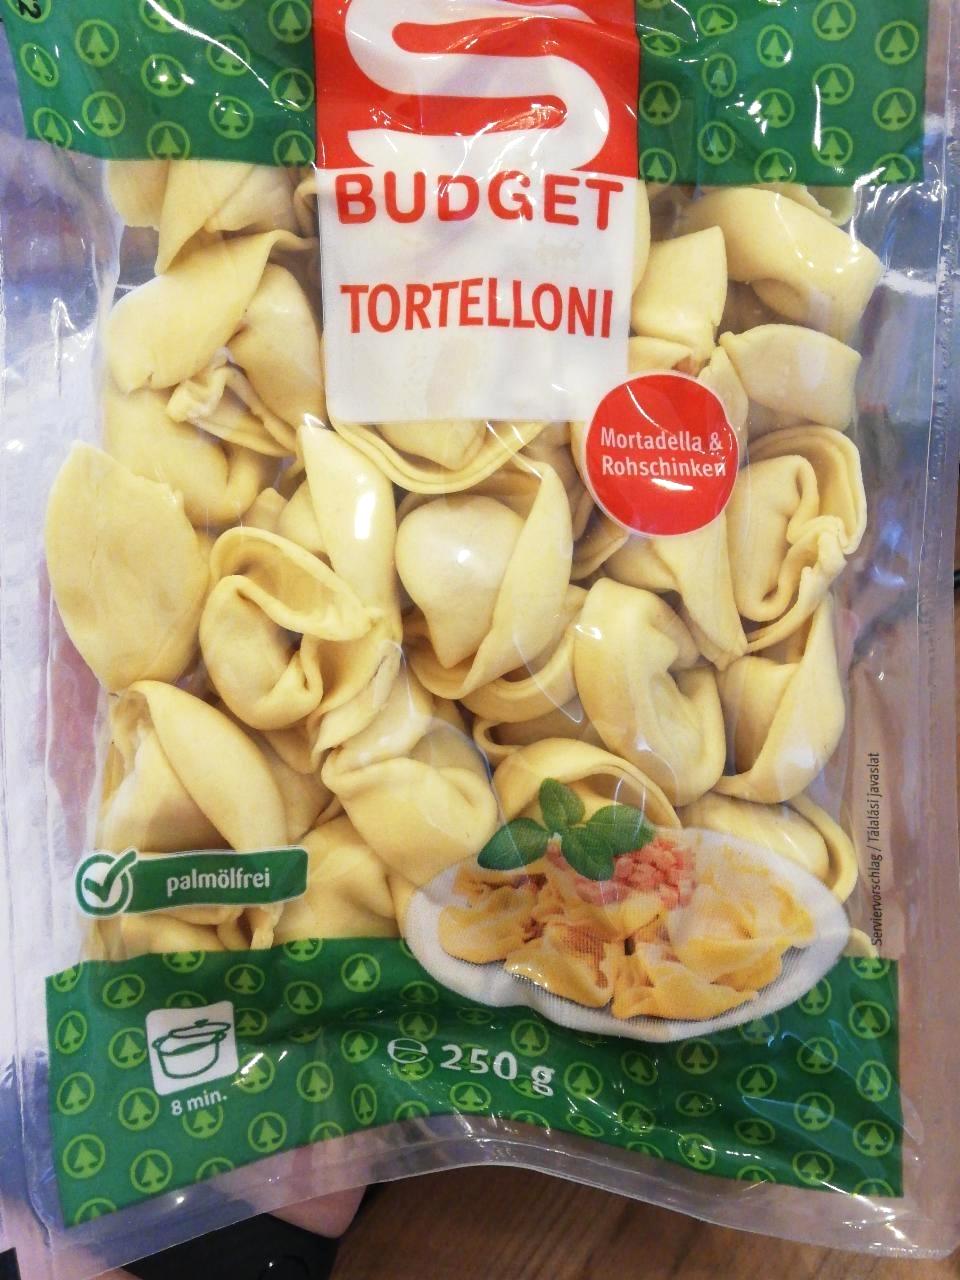 Képek - Tortelloni S budget